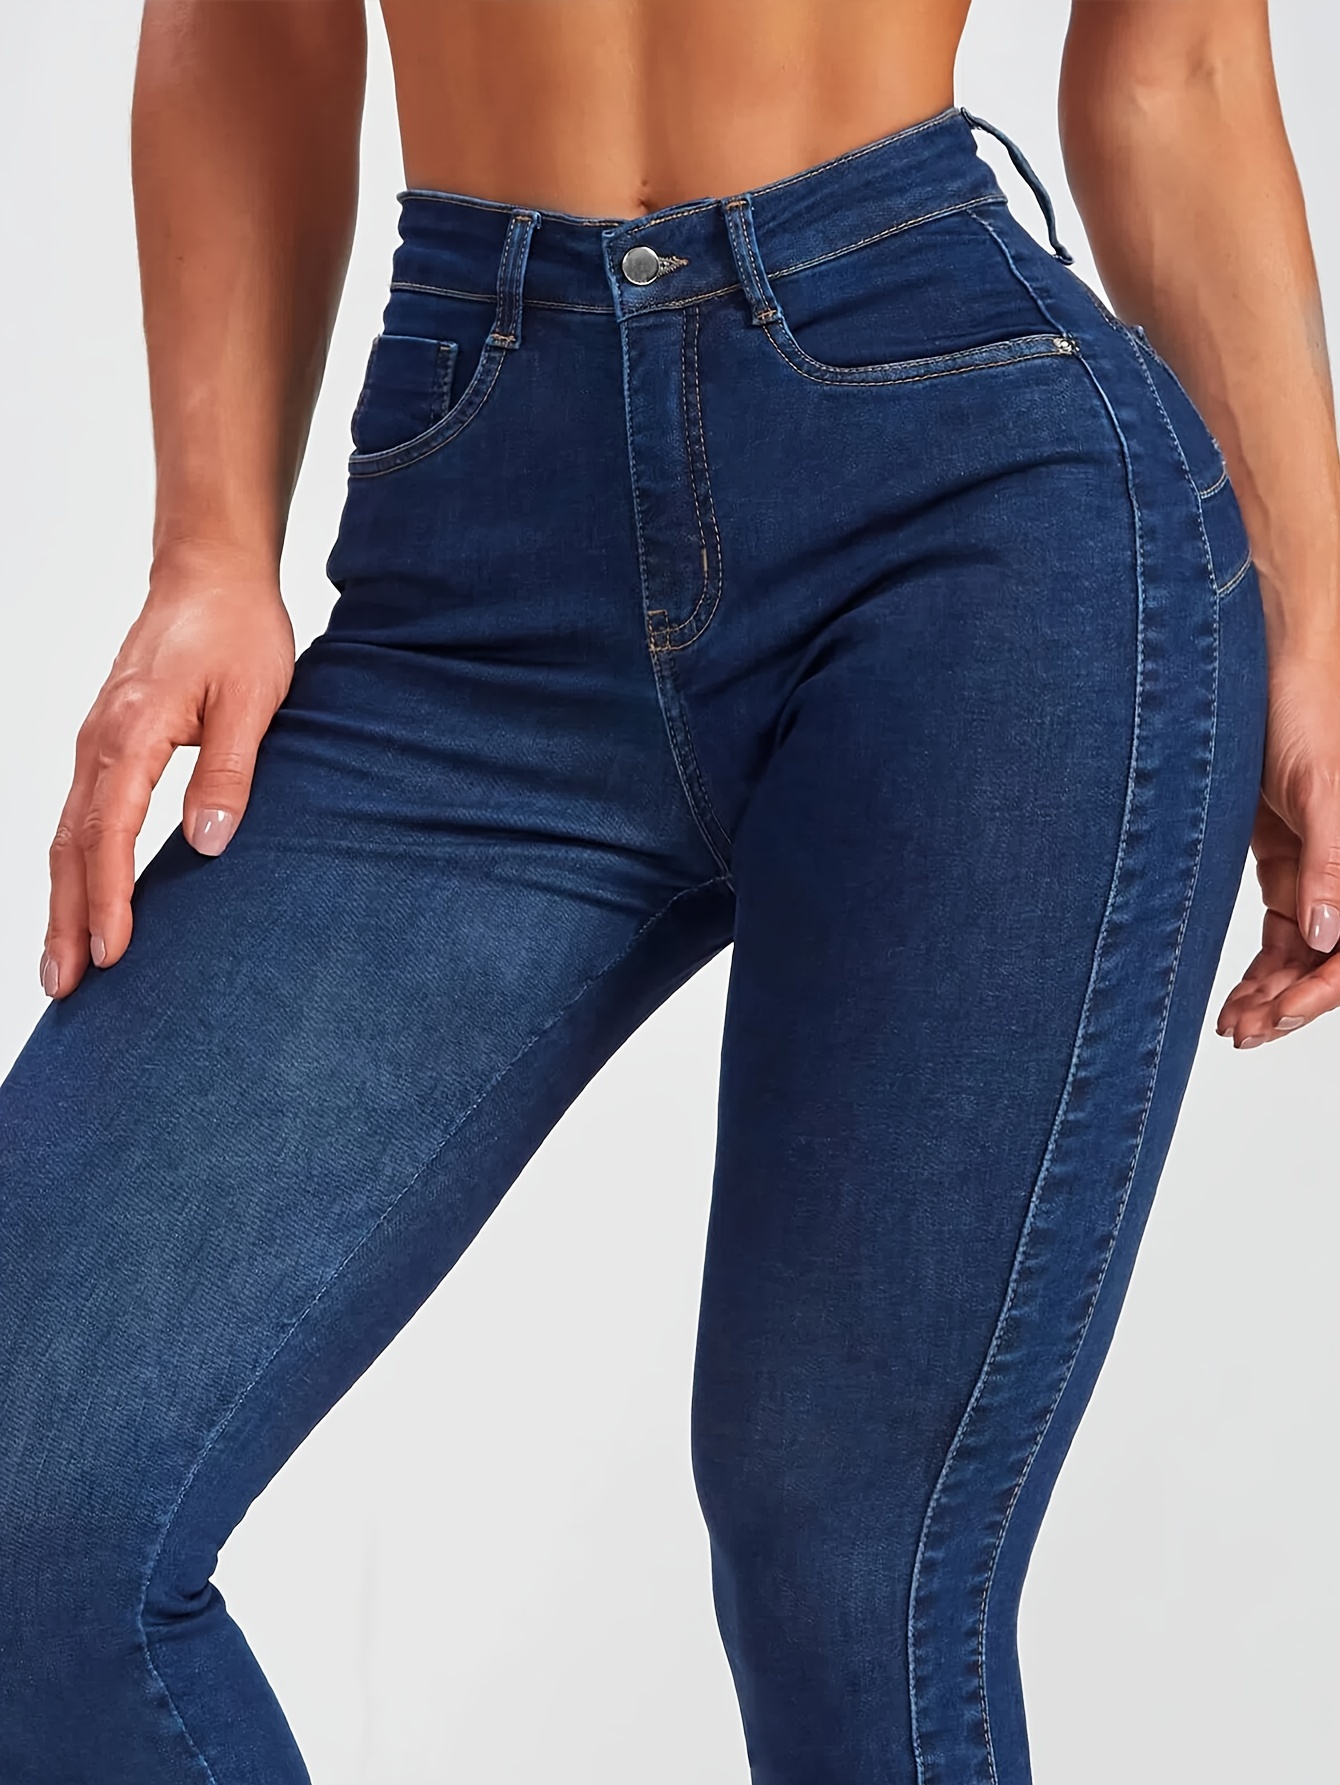 Classic Butt Lift Jeans